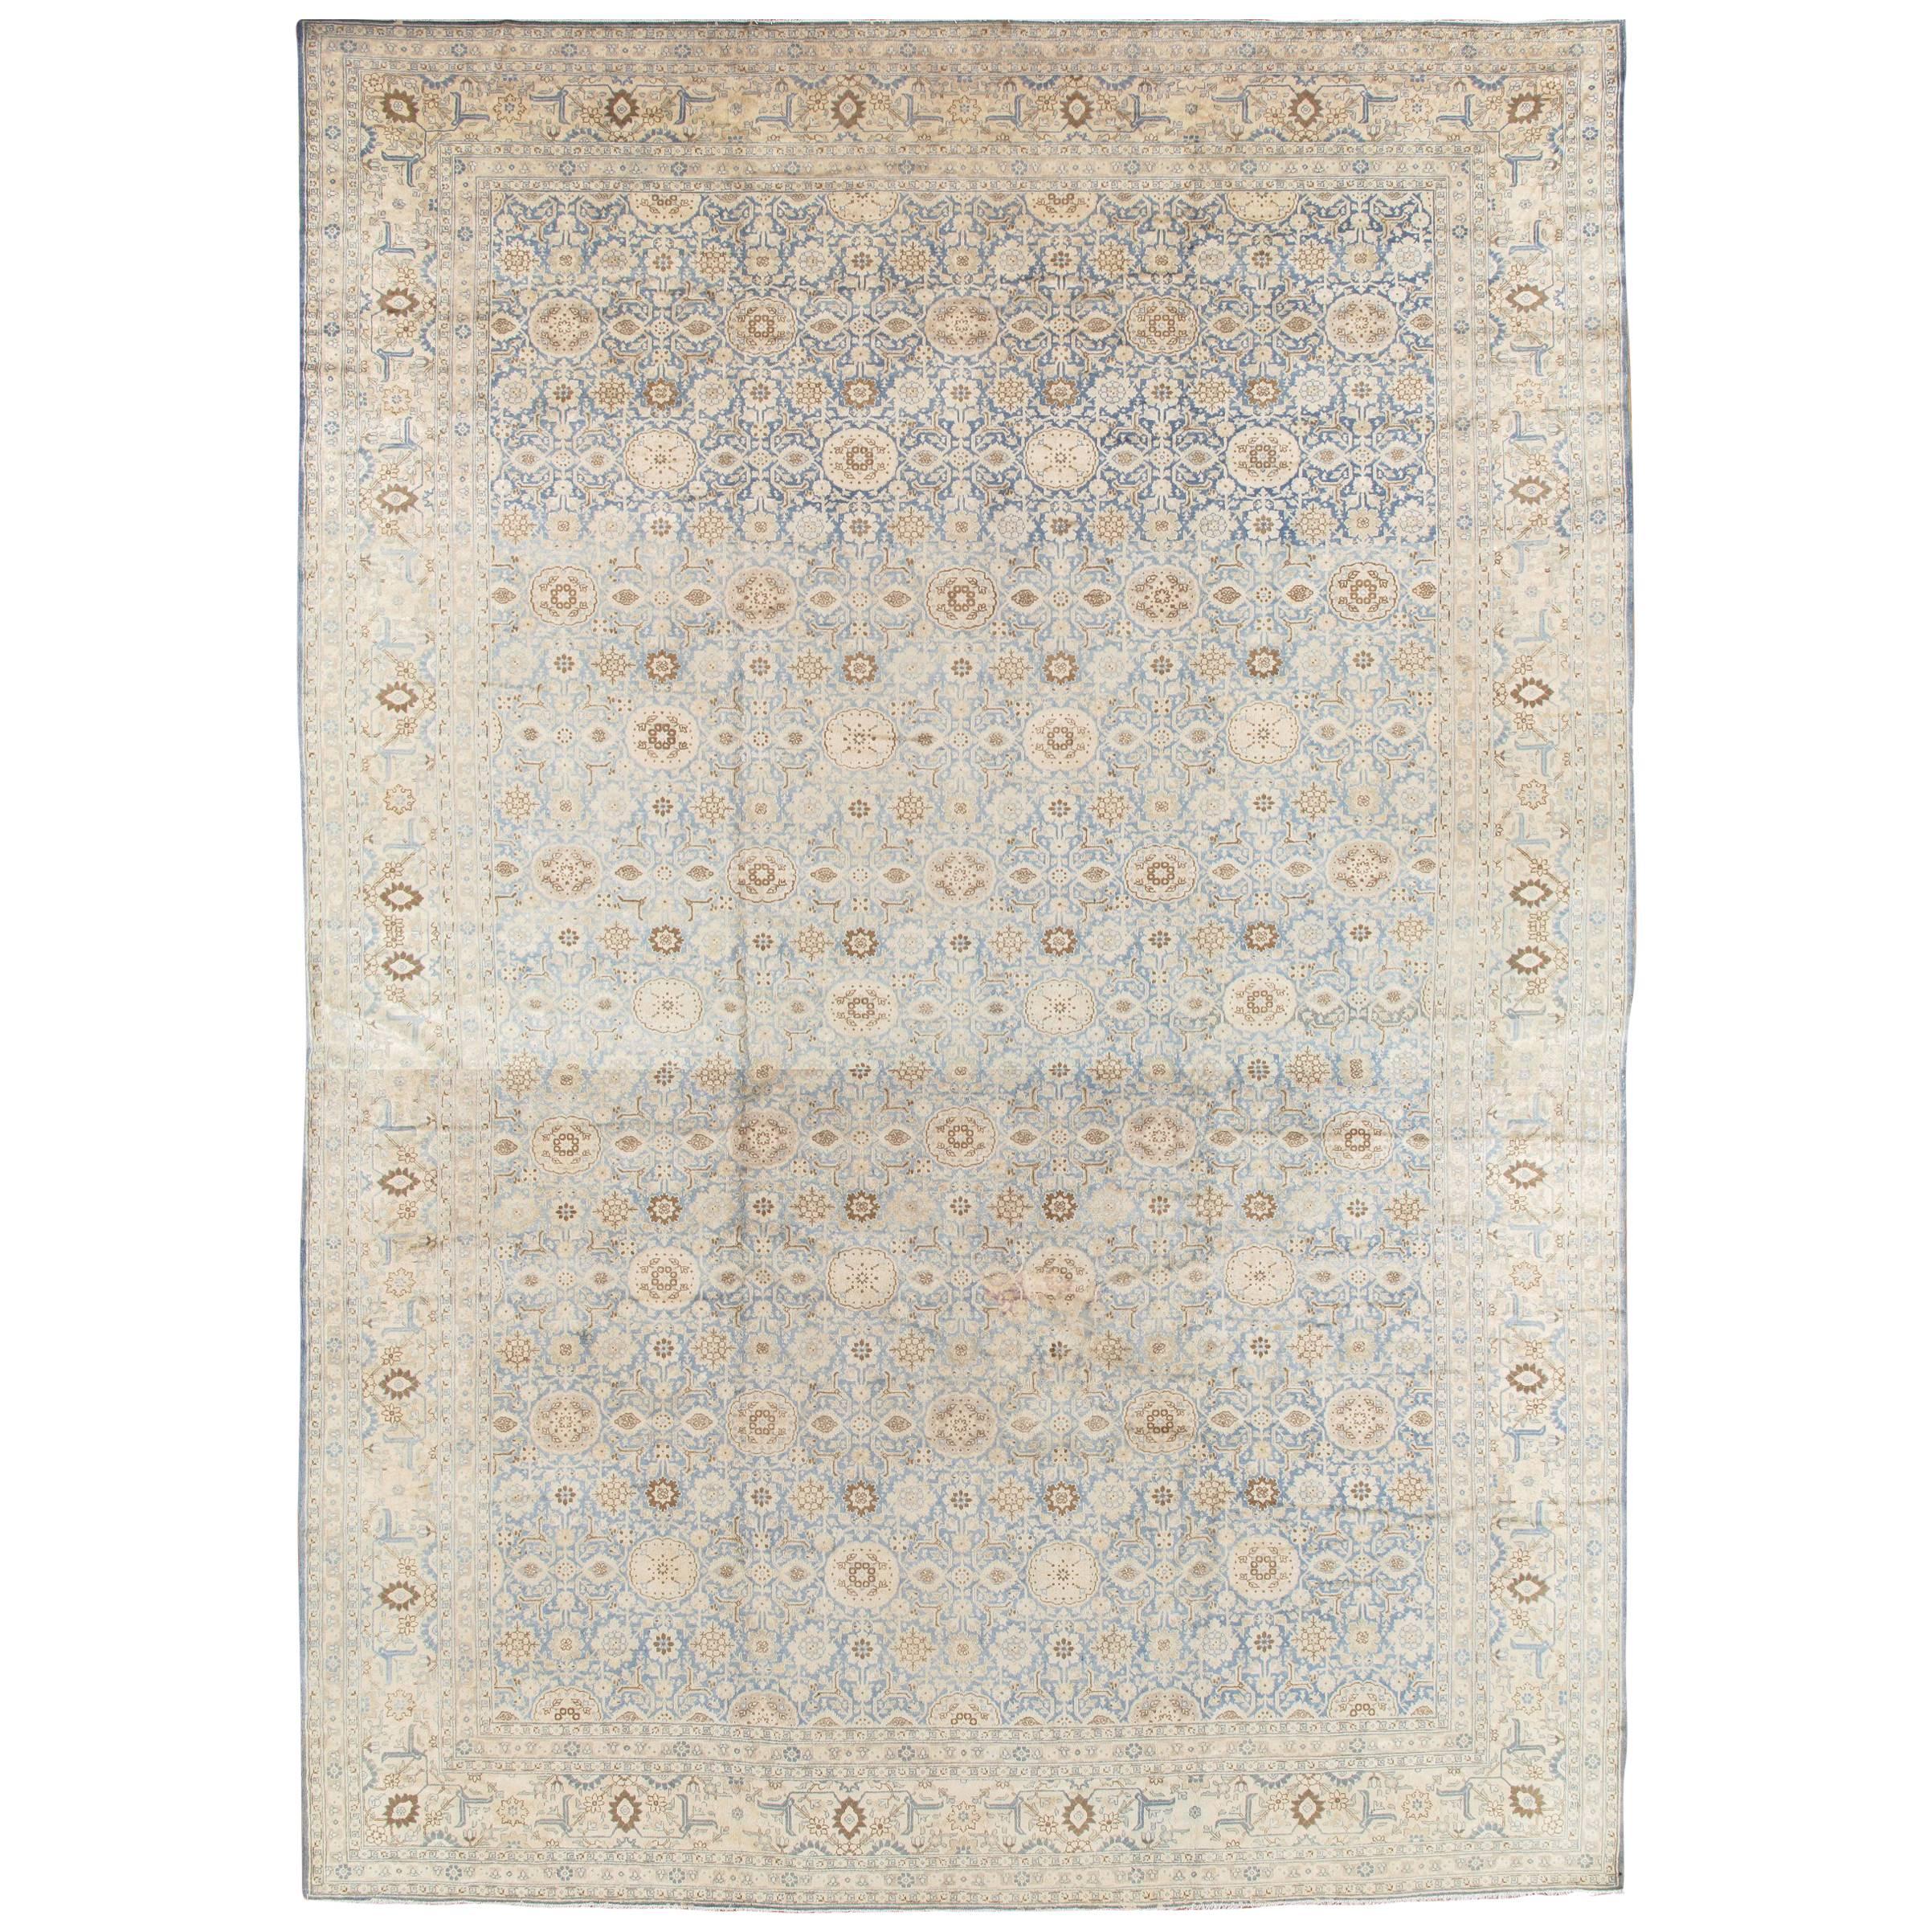 Antique Persian Tabriz Carpet, Pale Light Blue and Beige Carpet, Allover design